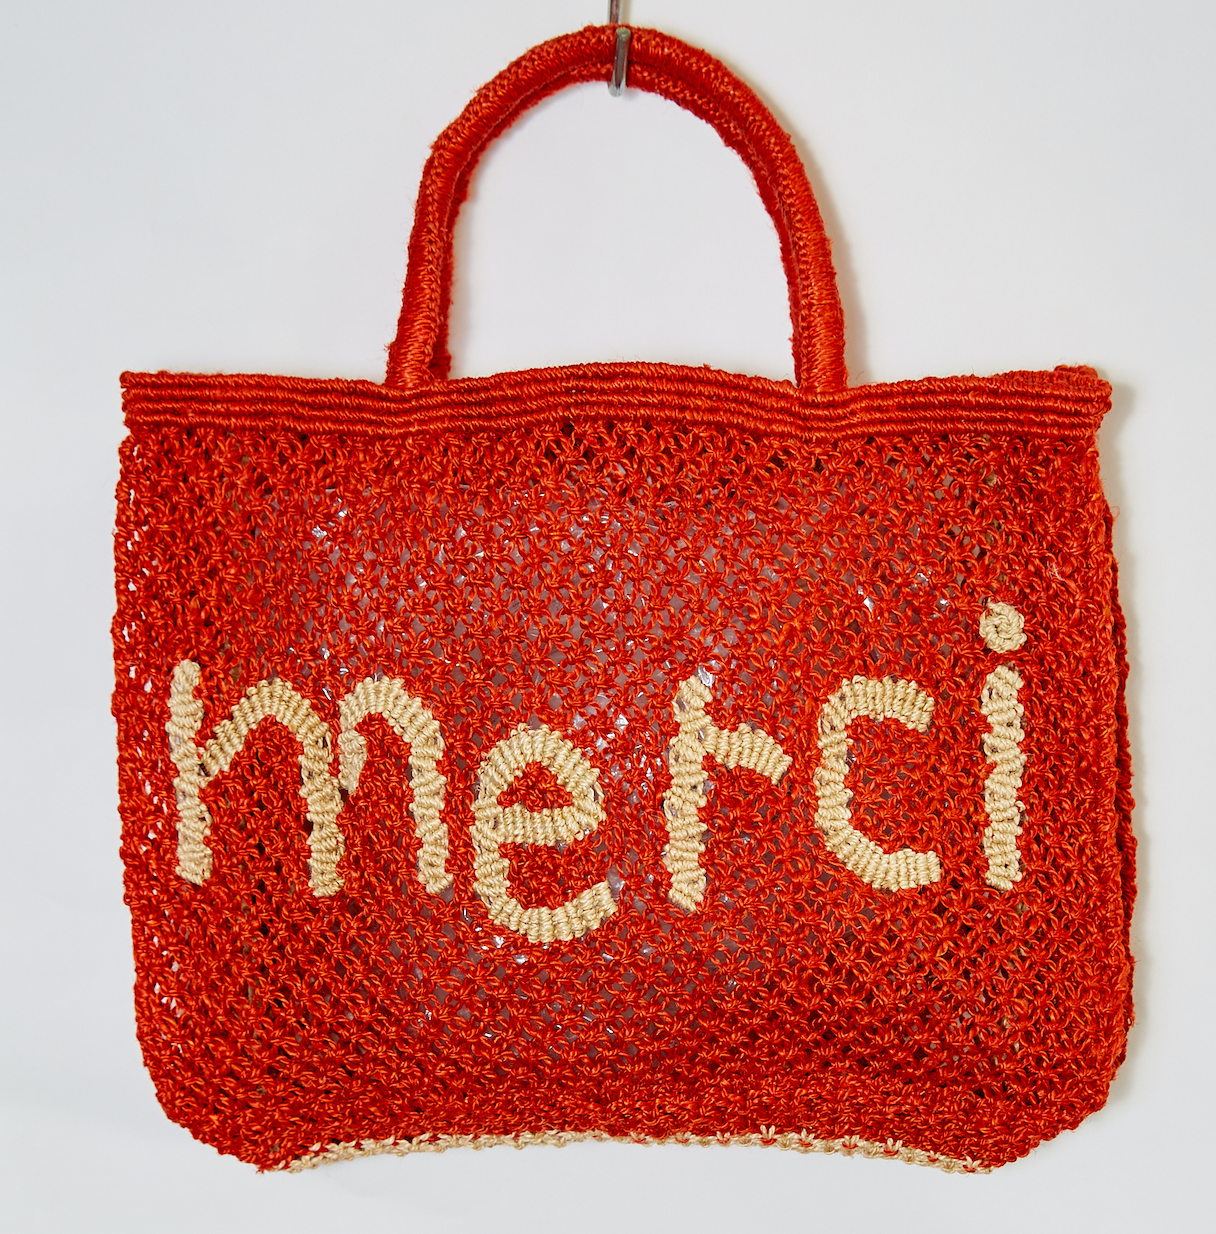 Basket Bag MERCI Red With Natural Writing